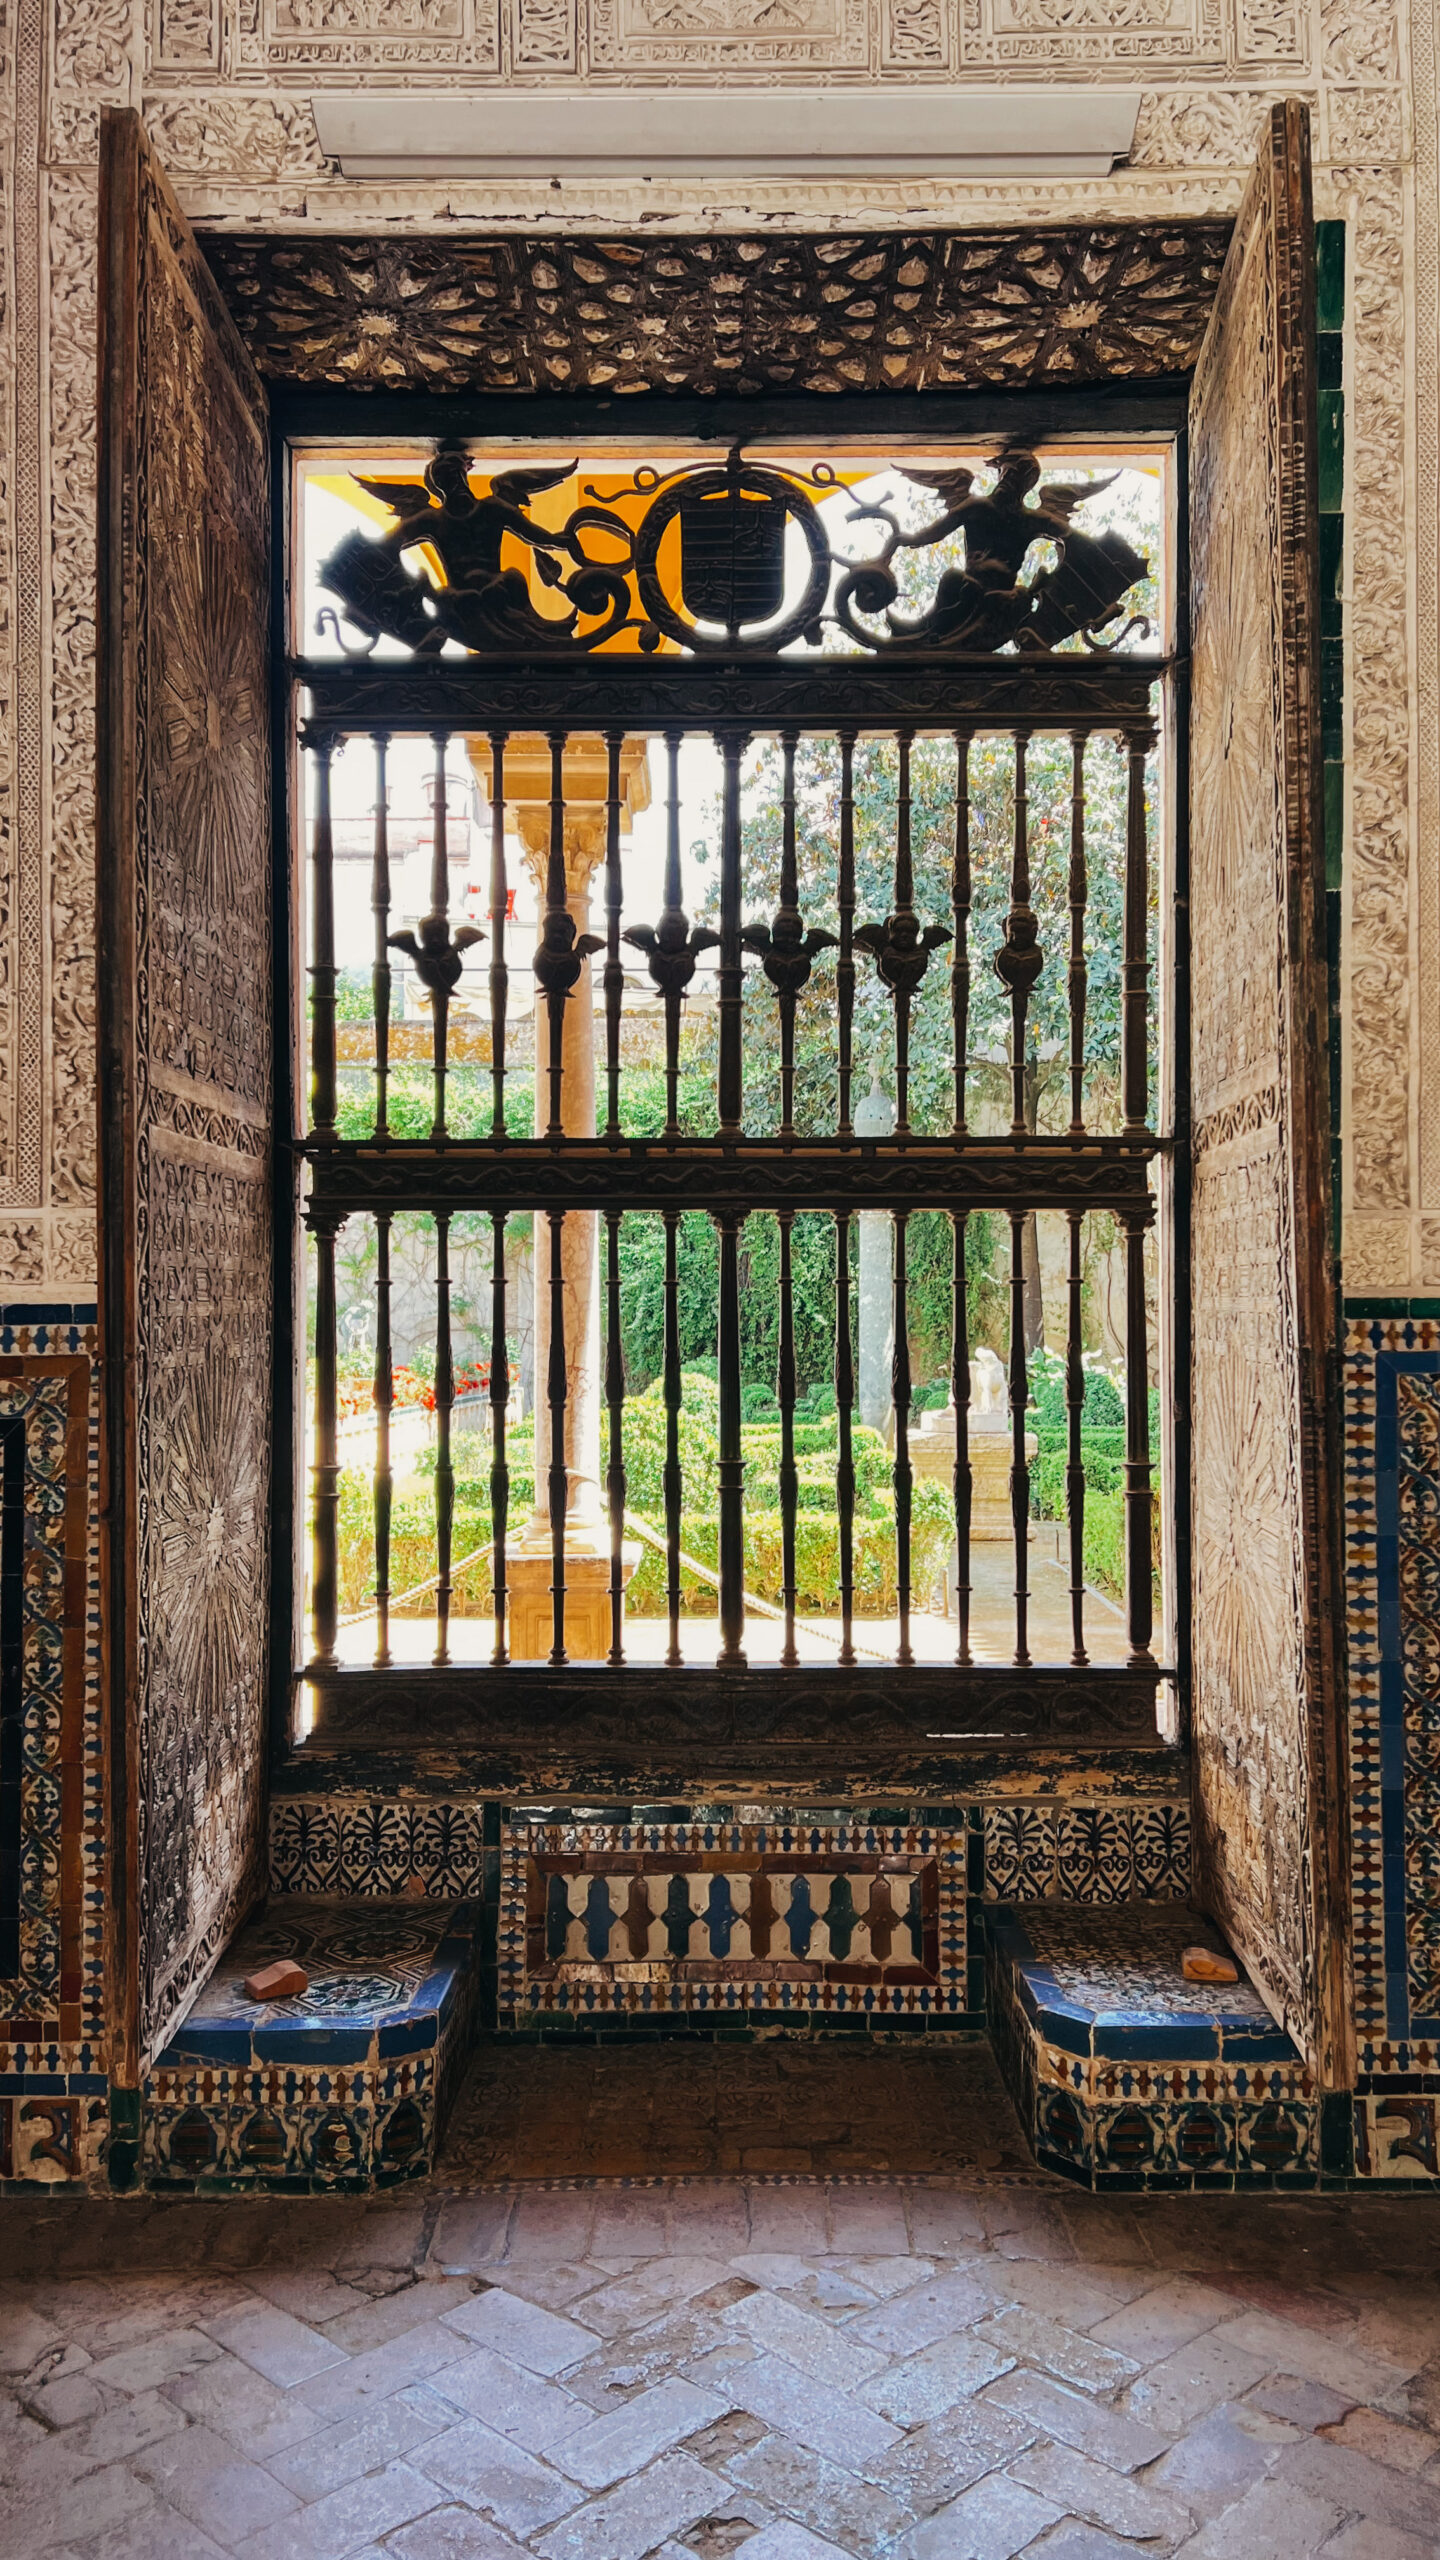 Seville, Casa de Pilatos window, by Dancing the Earth